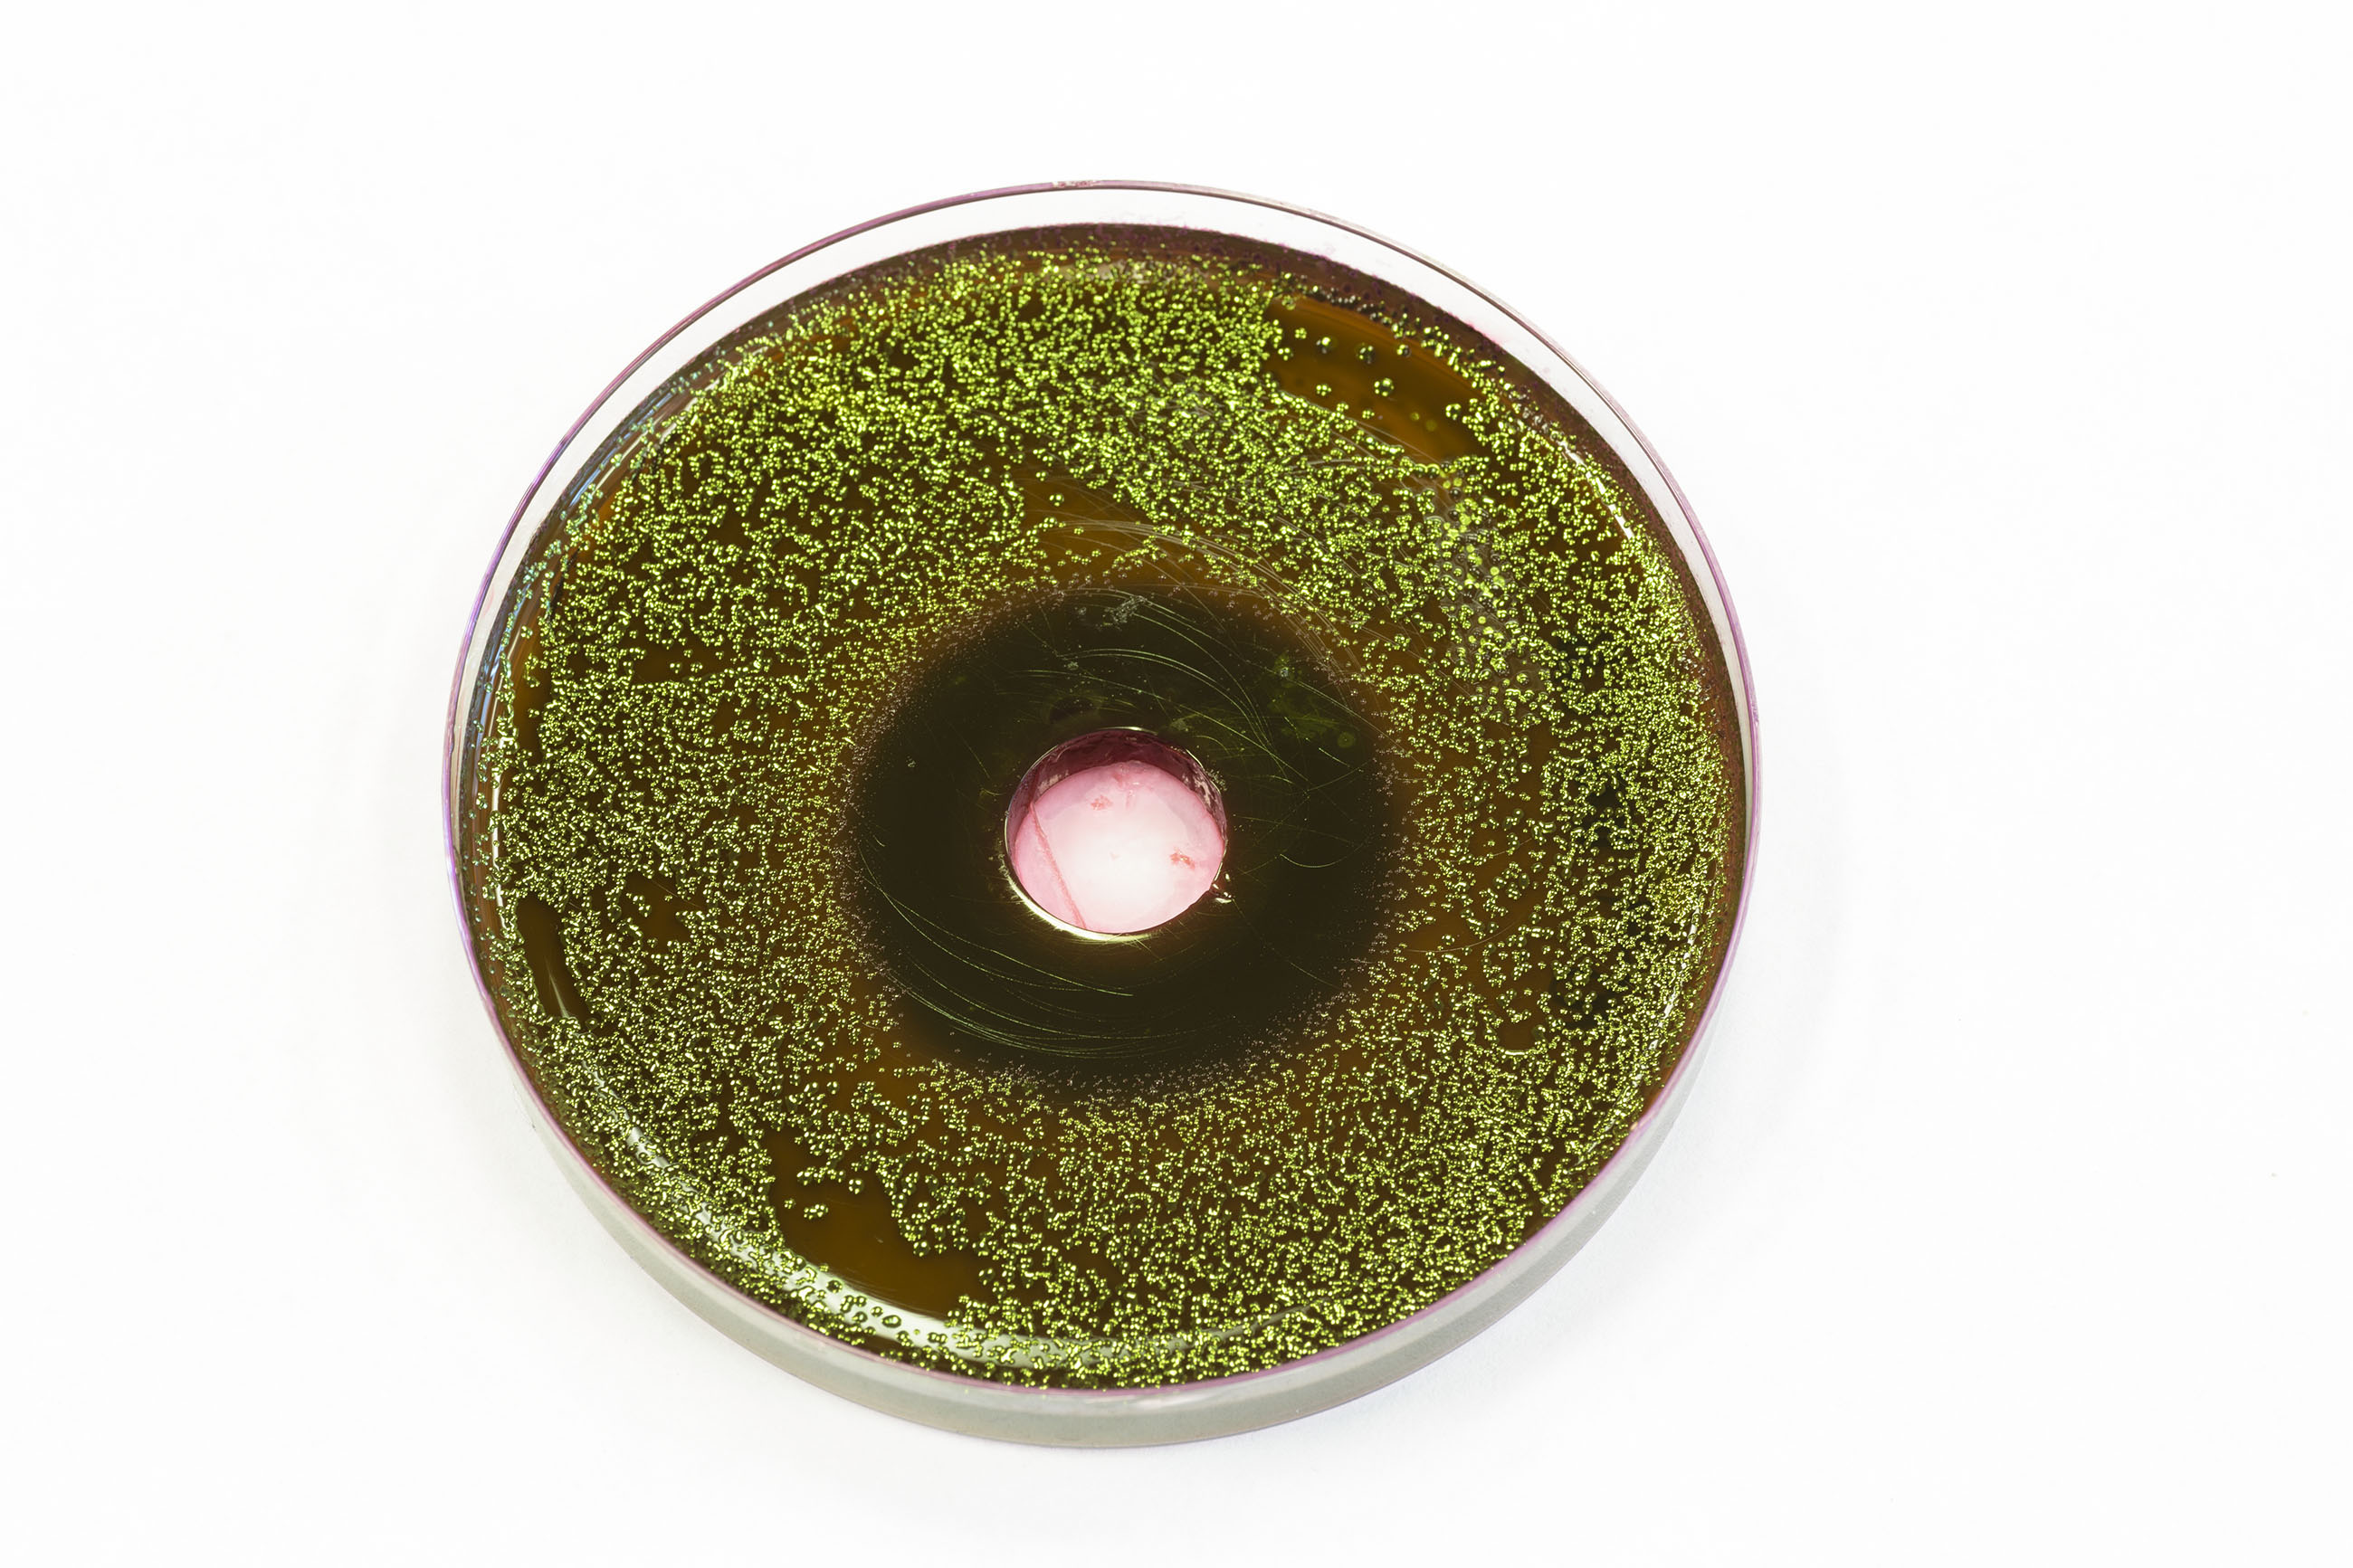 Bacteria growing on emb agar photo